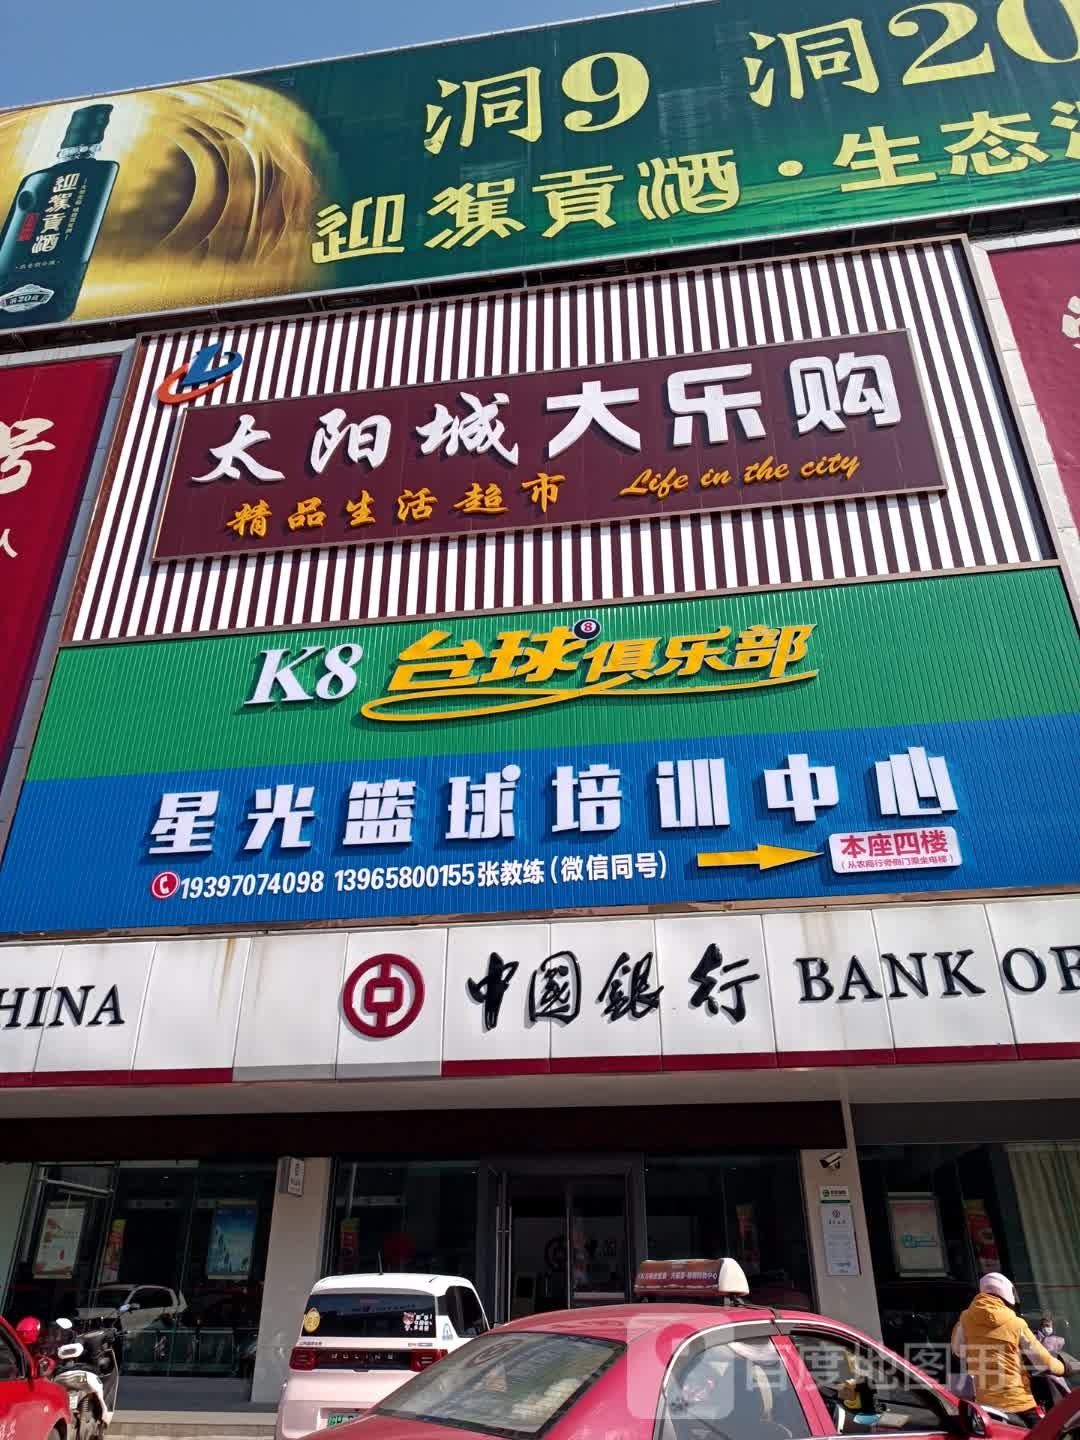 K8台球俱乐部(太阳城购物中心店)